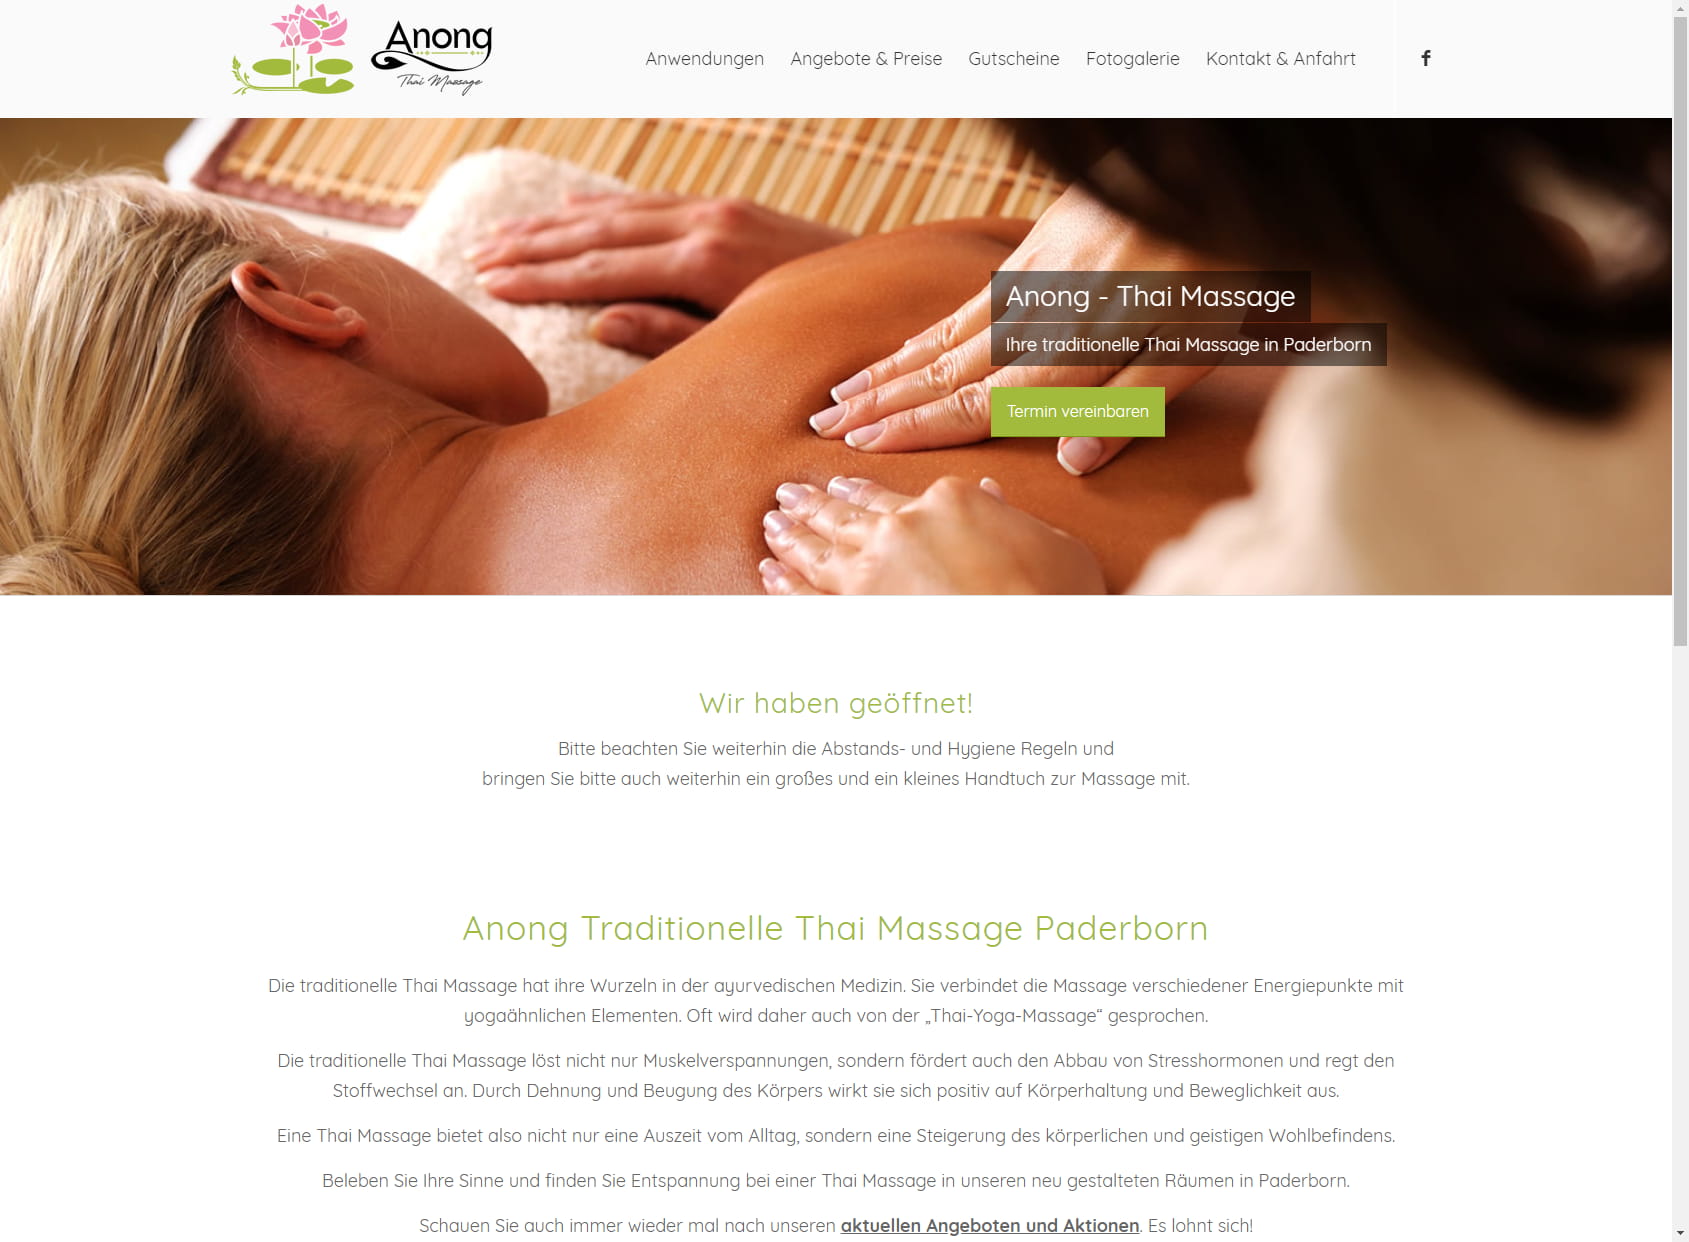 Anong Traditionelle Thai Massage Paderborn